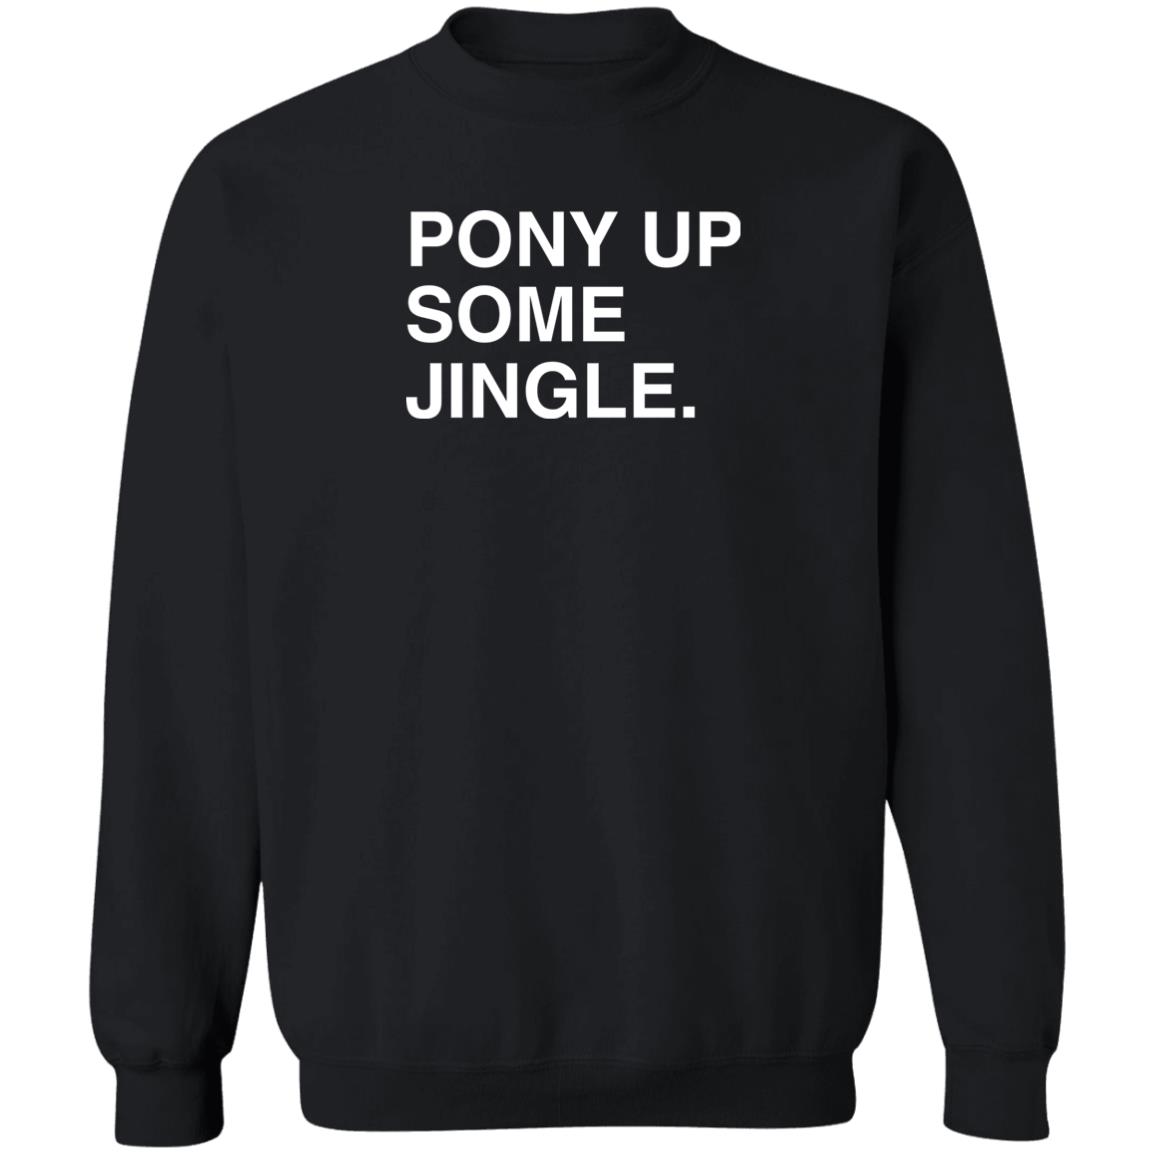 Pony Up Some Jingle Shirt Jim Deshaies Boog Obvious Shirts Store